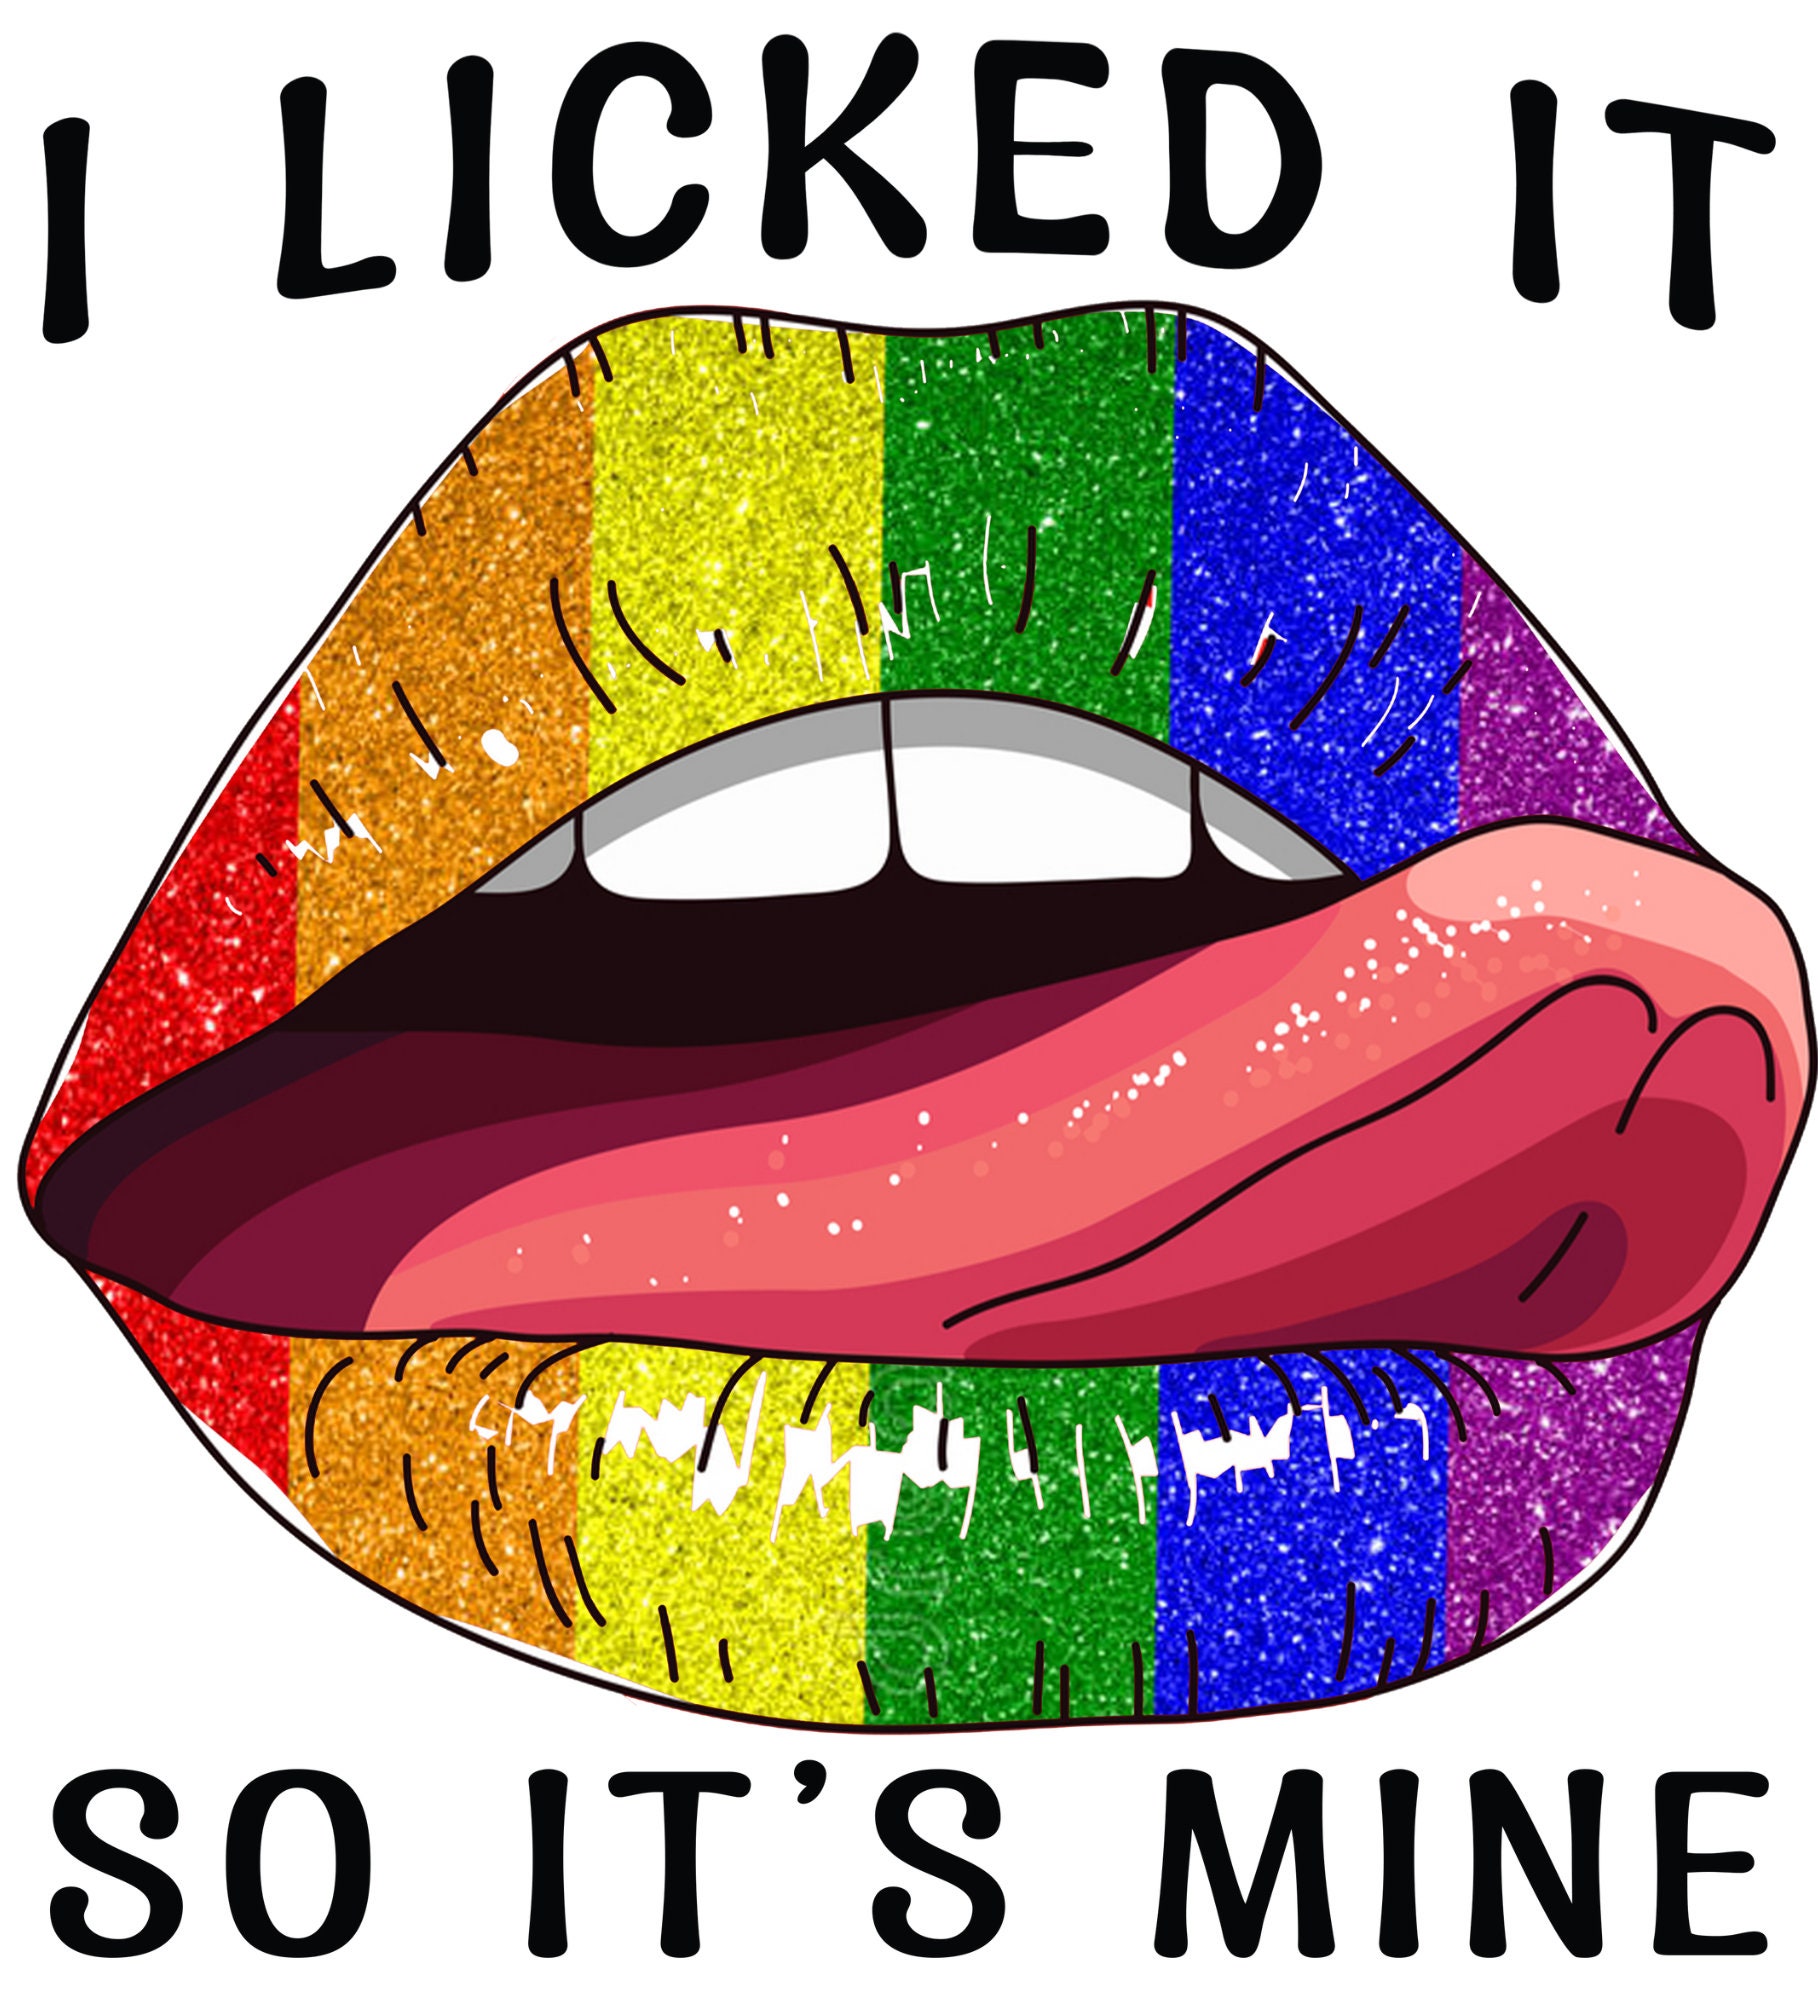 I Licked It So It’s Mine | Official Disney Tee T-Shirt / Women's / S